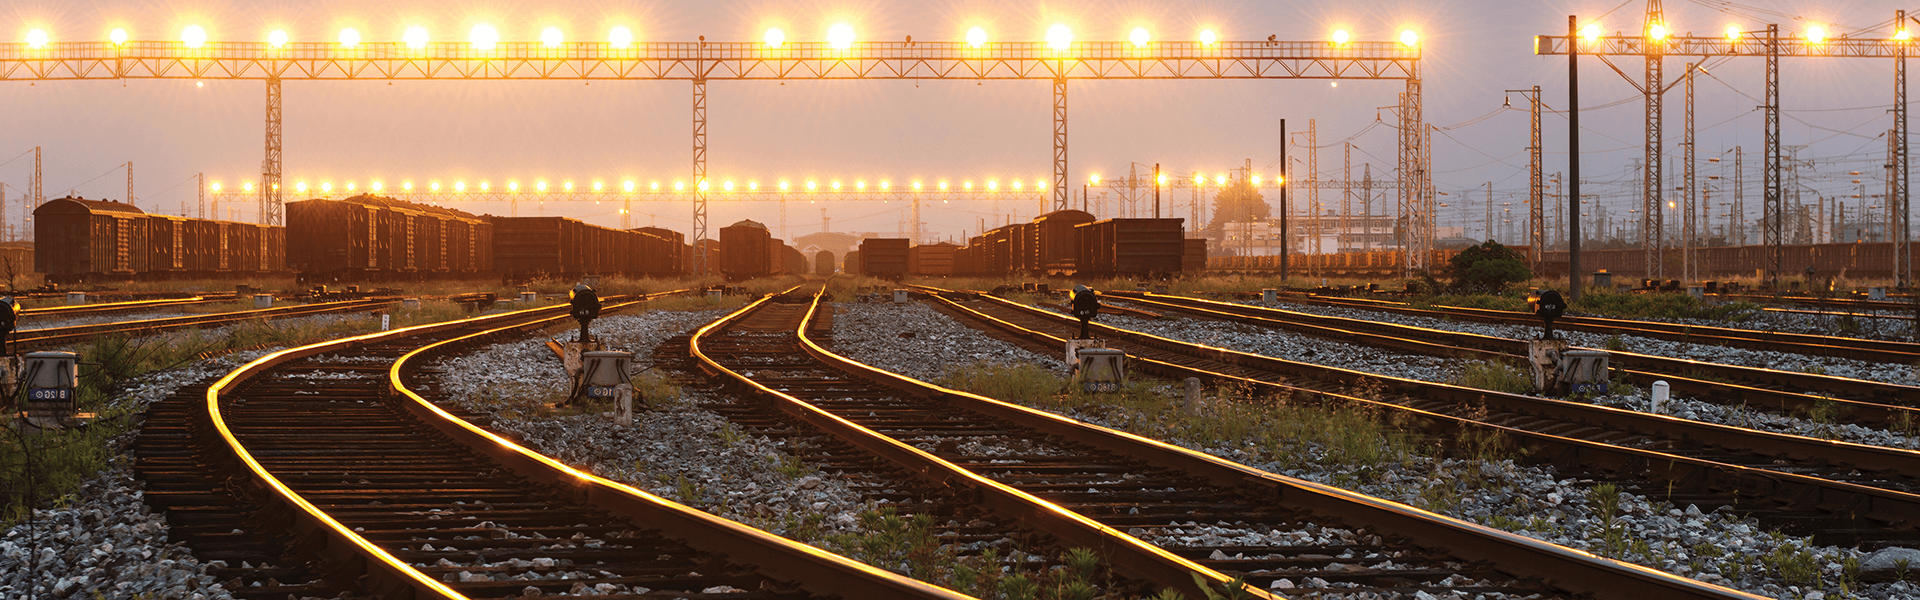 Economic Infrastructure of India: Railway Infrastructure